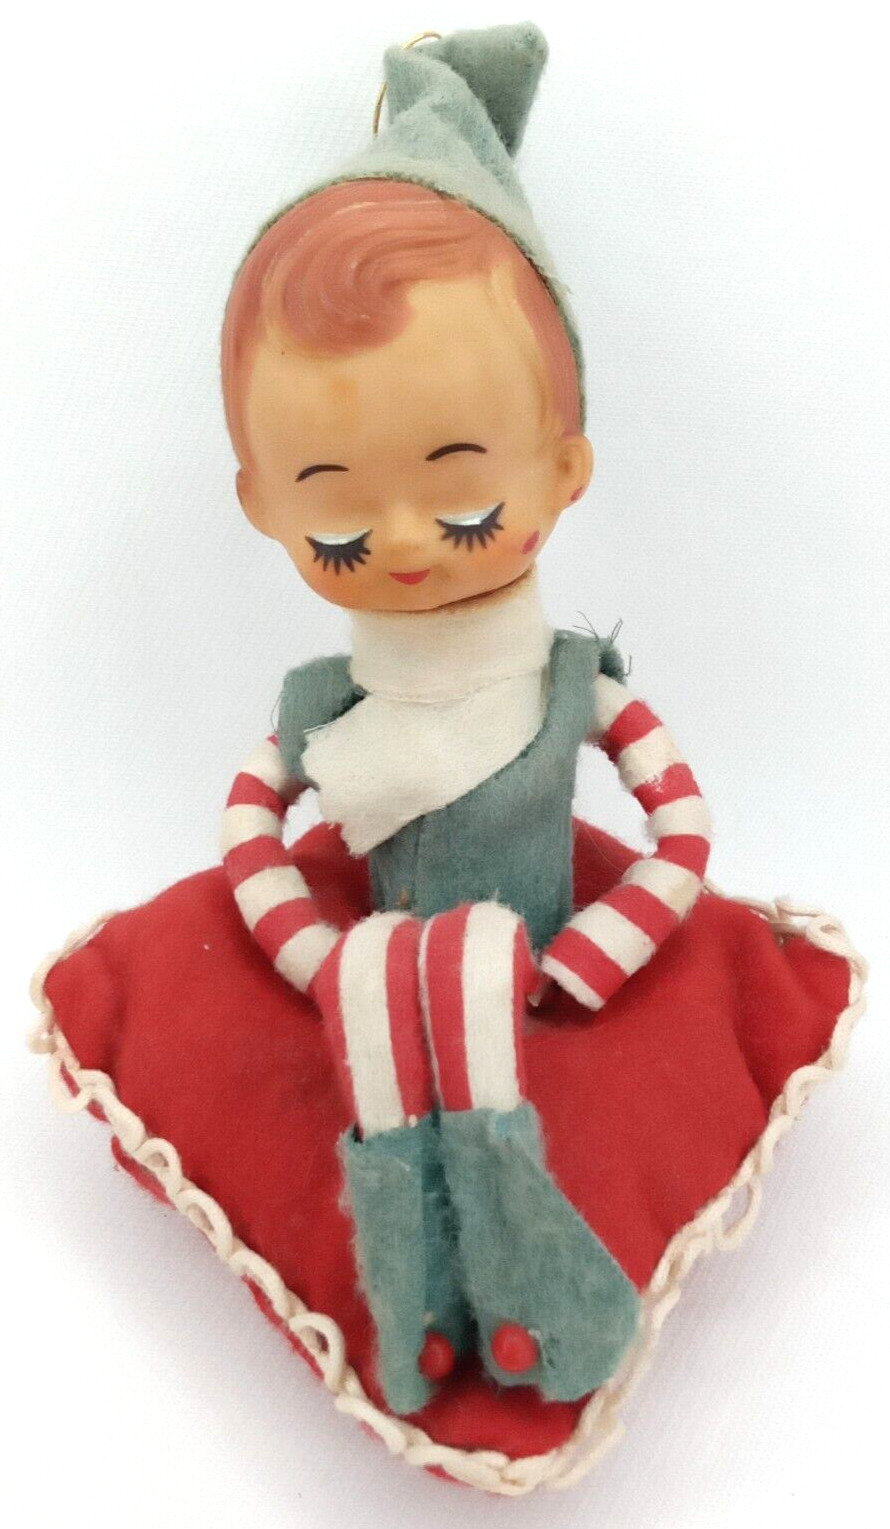 Christmas Ornament Knee Hugger Pixie Elf On A Pillow 1950s Japan Holiday Decor